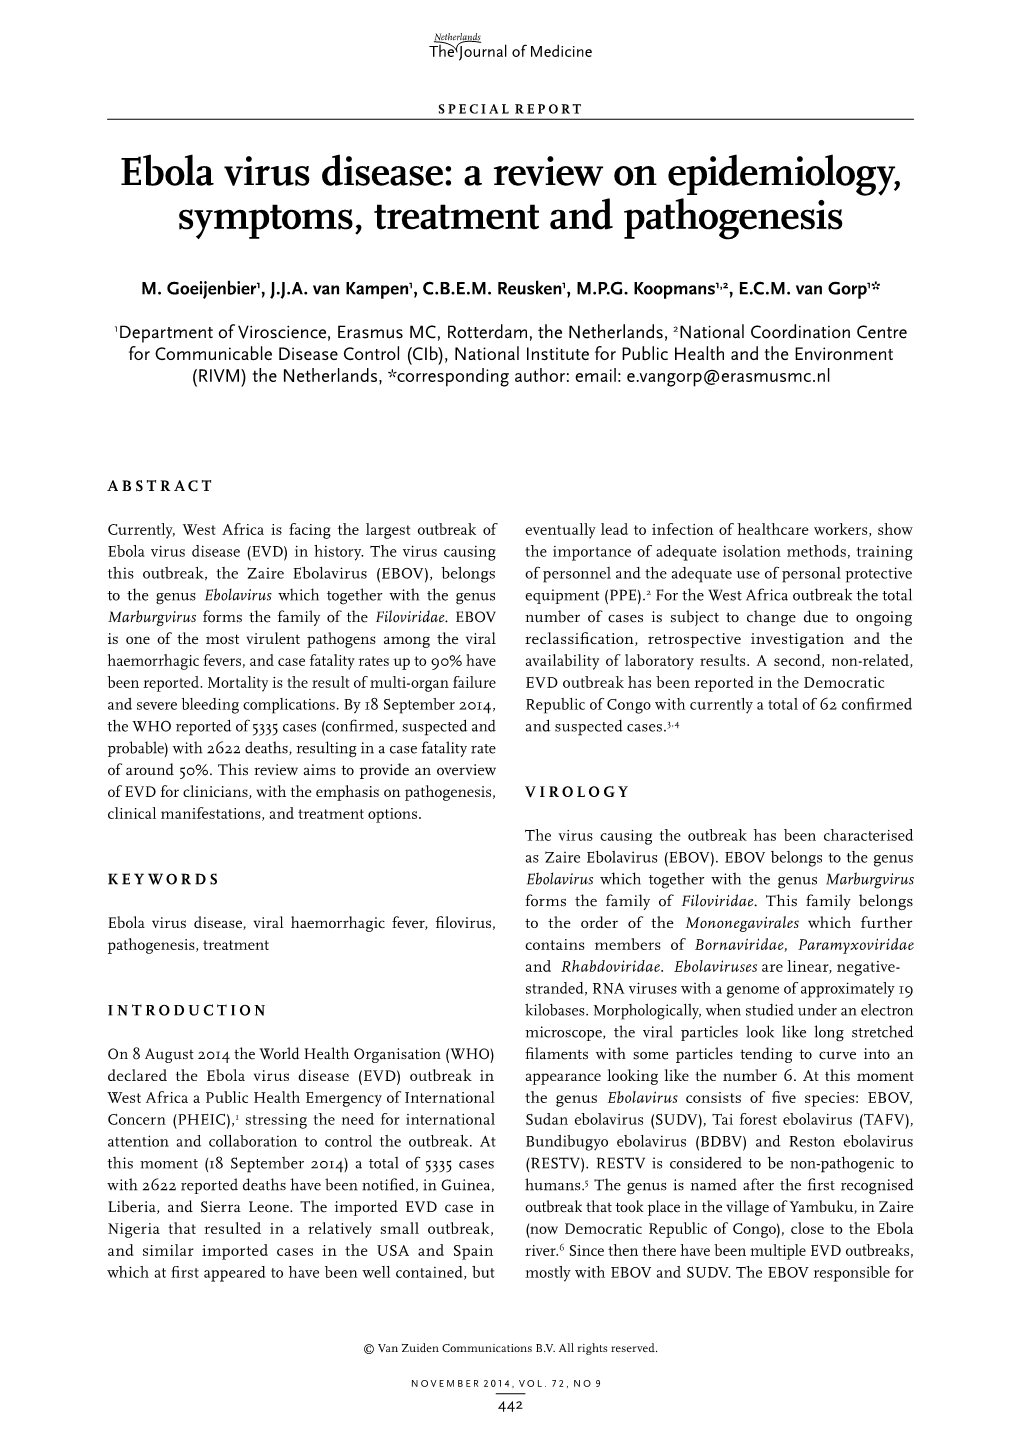 Ebola Virus Disease: a Review on Epidemiology, Symptoms, Treatment and Pathogenesis